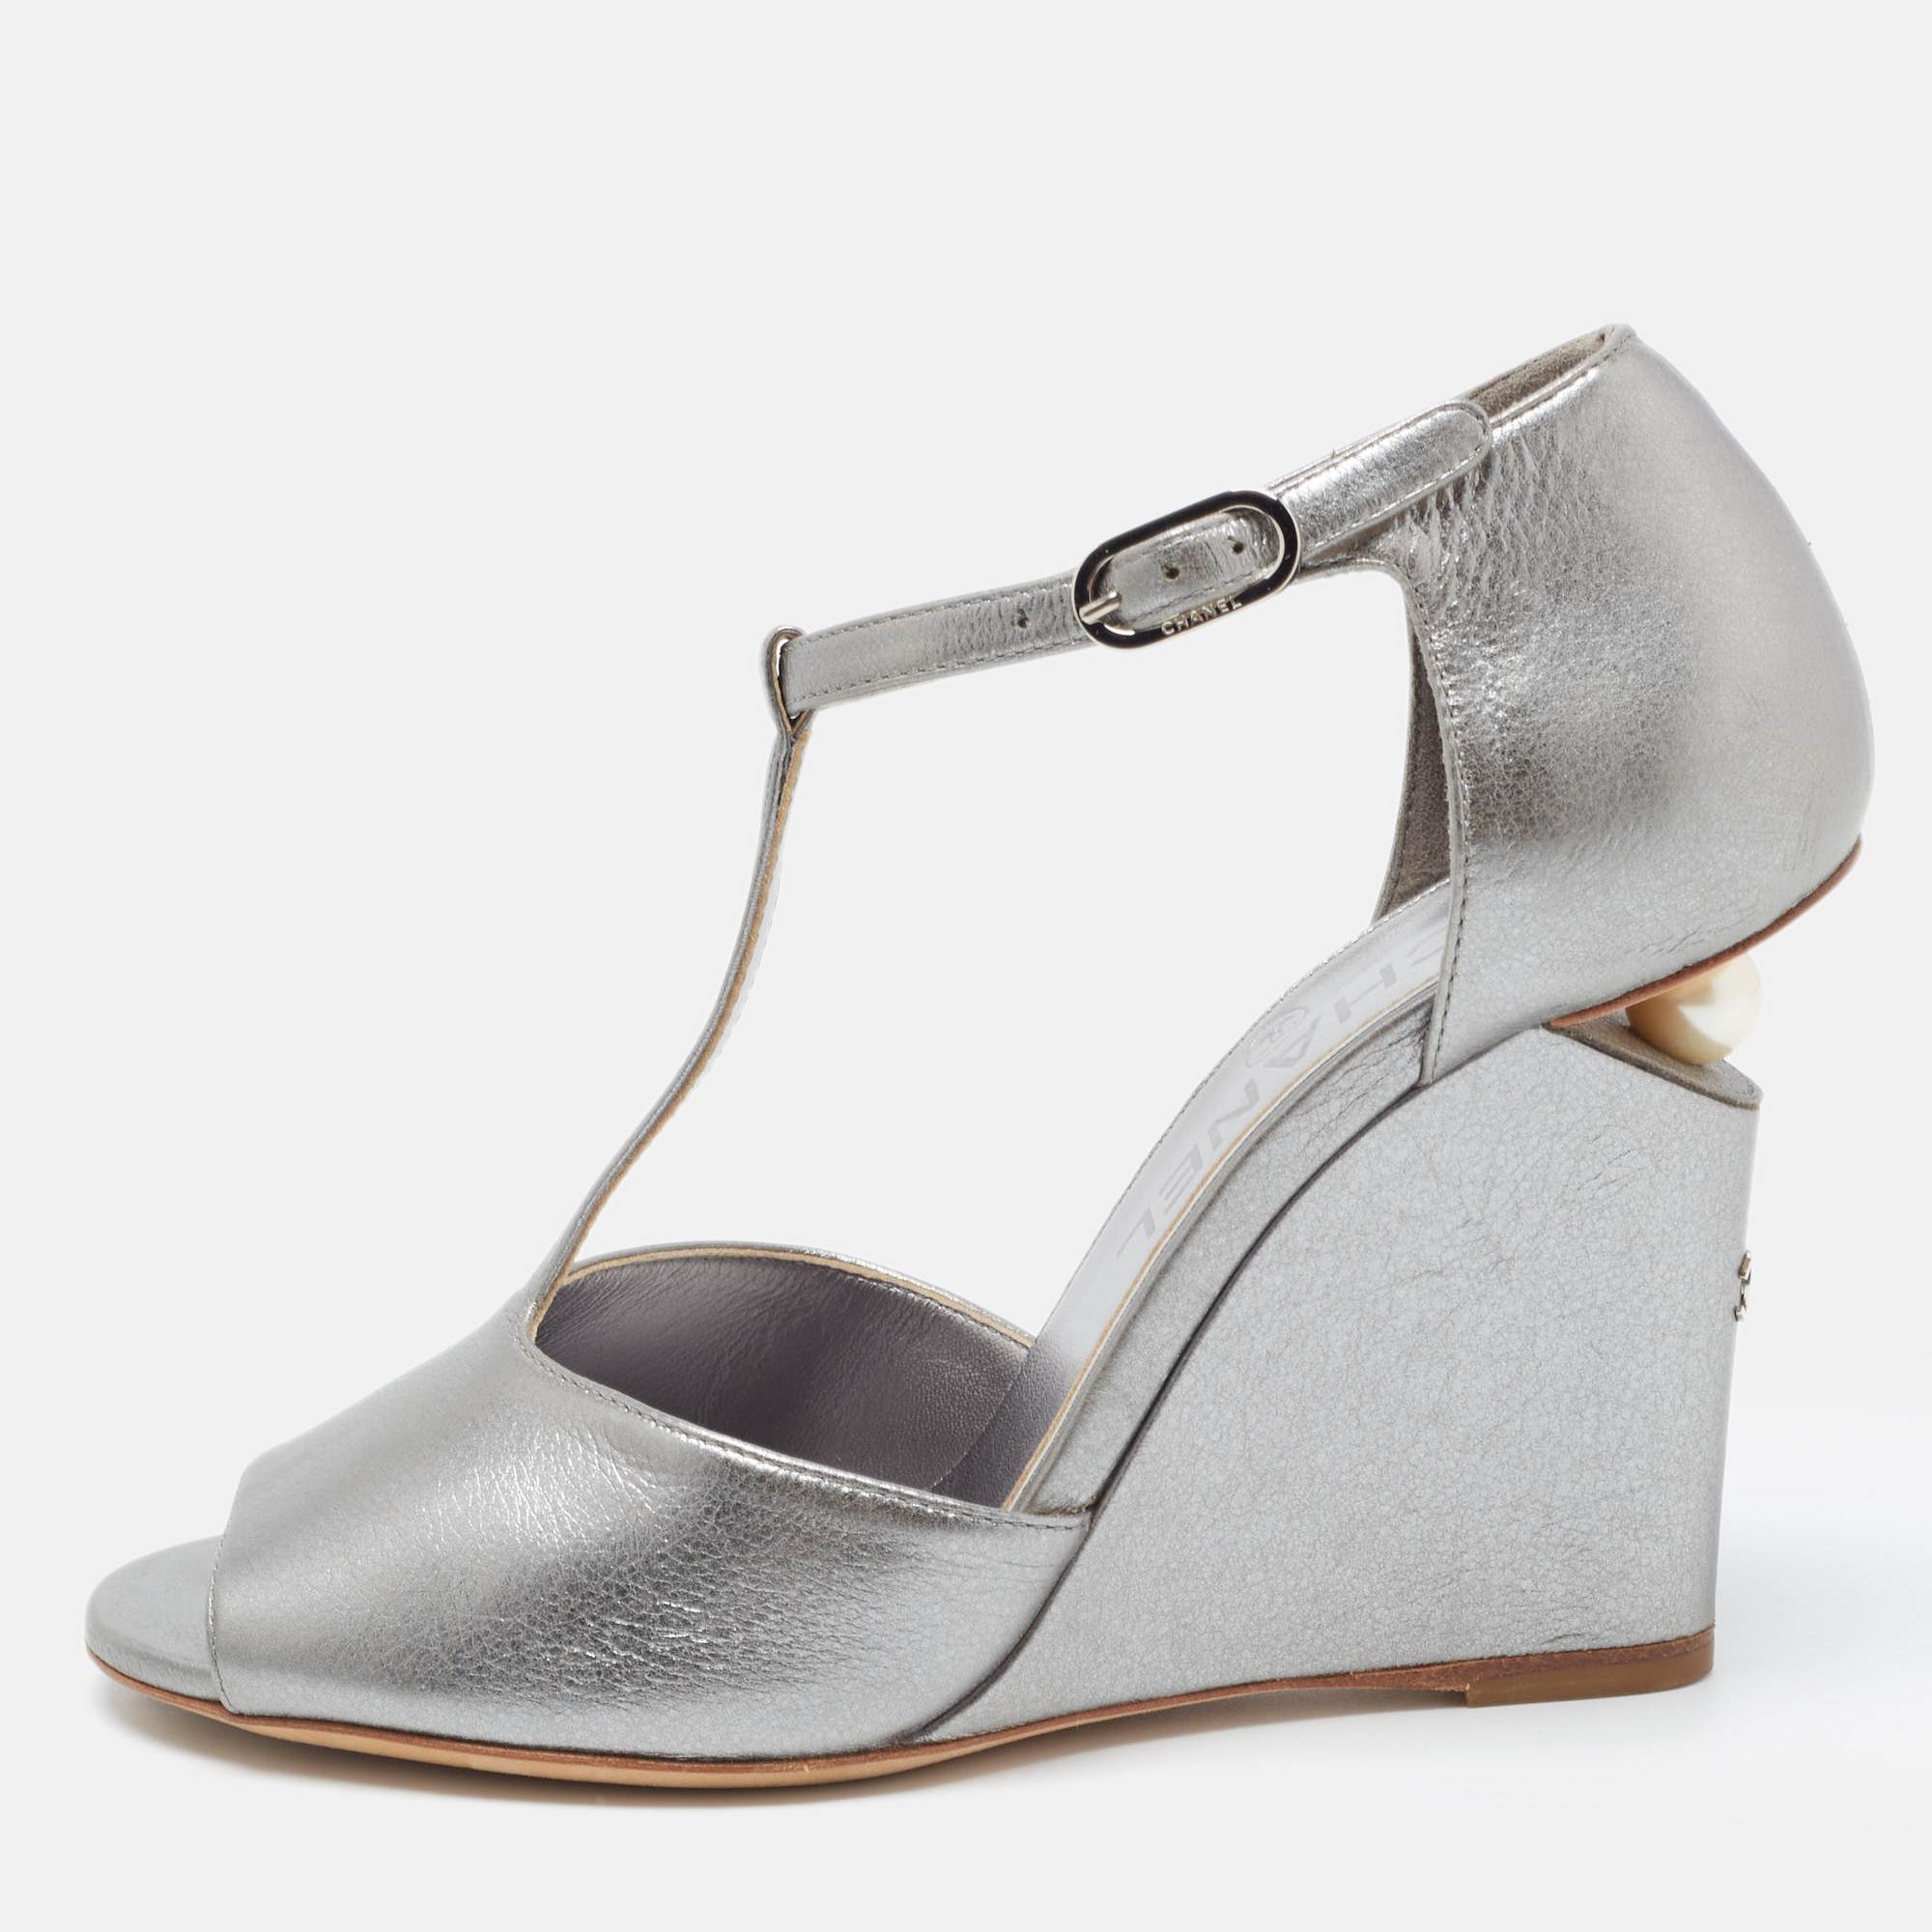 CHANEL Burgundy Leather Platform Wedge Sandals Size 37 1/2 Ladies